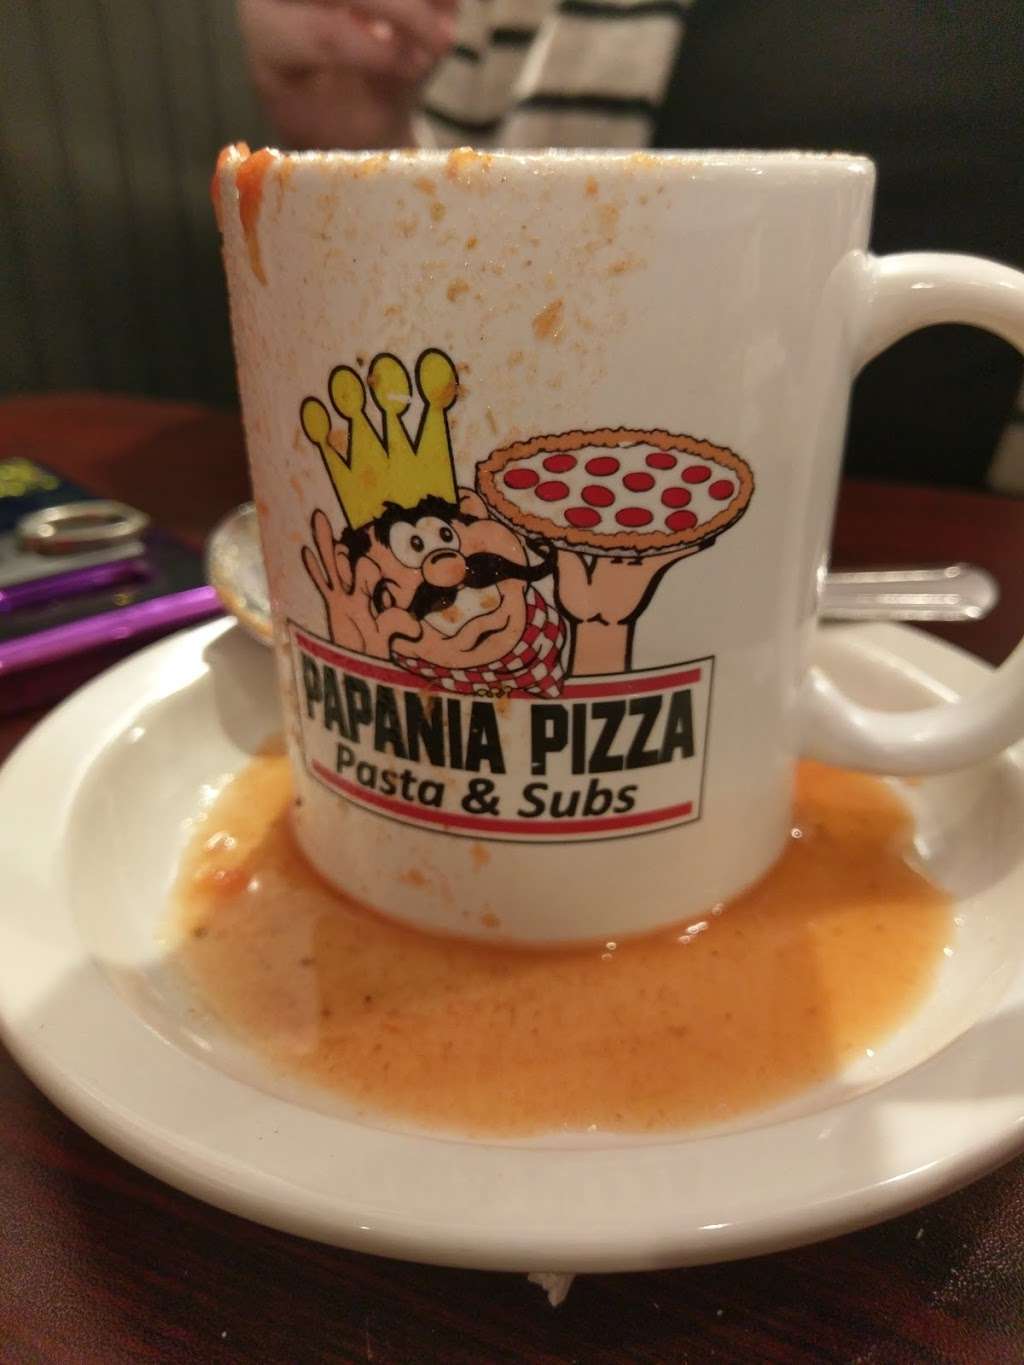 Papania Pizza, Pasta & Subs | 11244 Pulaski Hwy, White Marsh, MD 21162 | Phone: (410) 335-7827